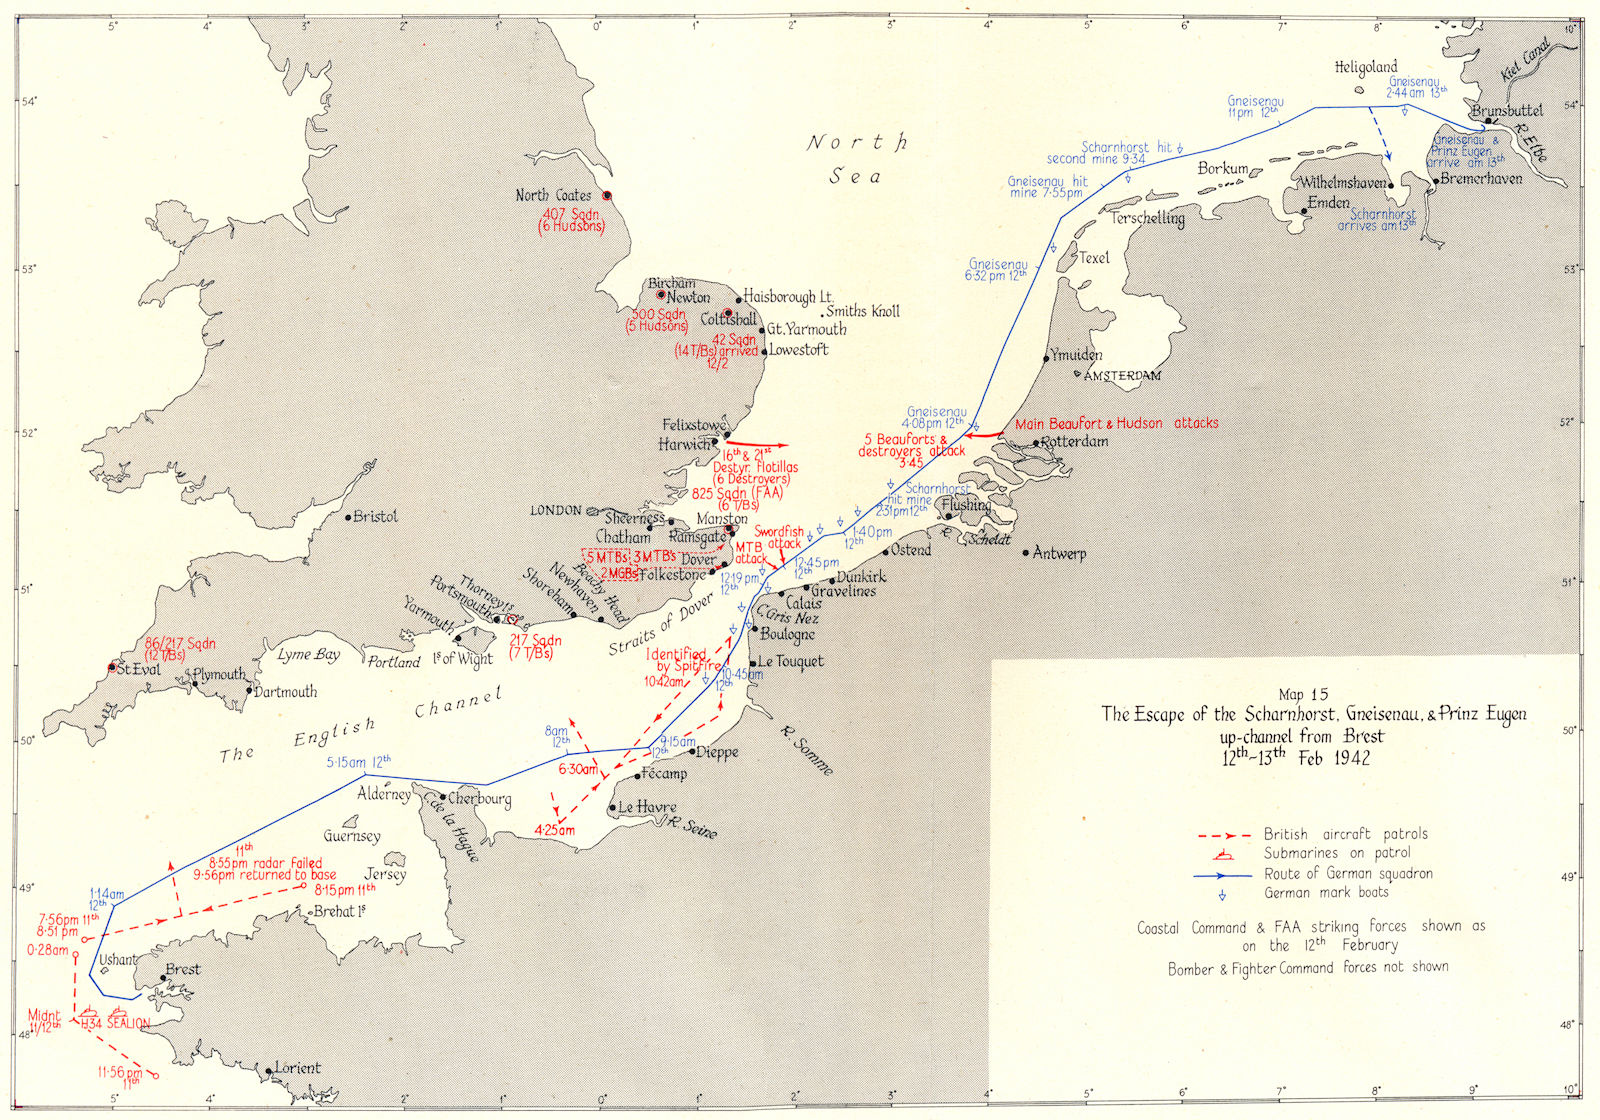 FINISTÈRE. Escape Scharnhorst, Gneisenau & Prinz Eugen; Brest Feb 1942 1956 map